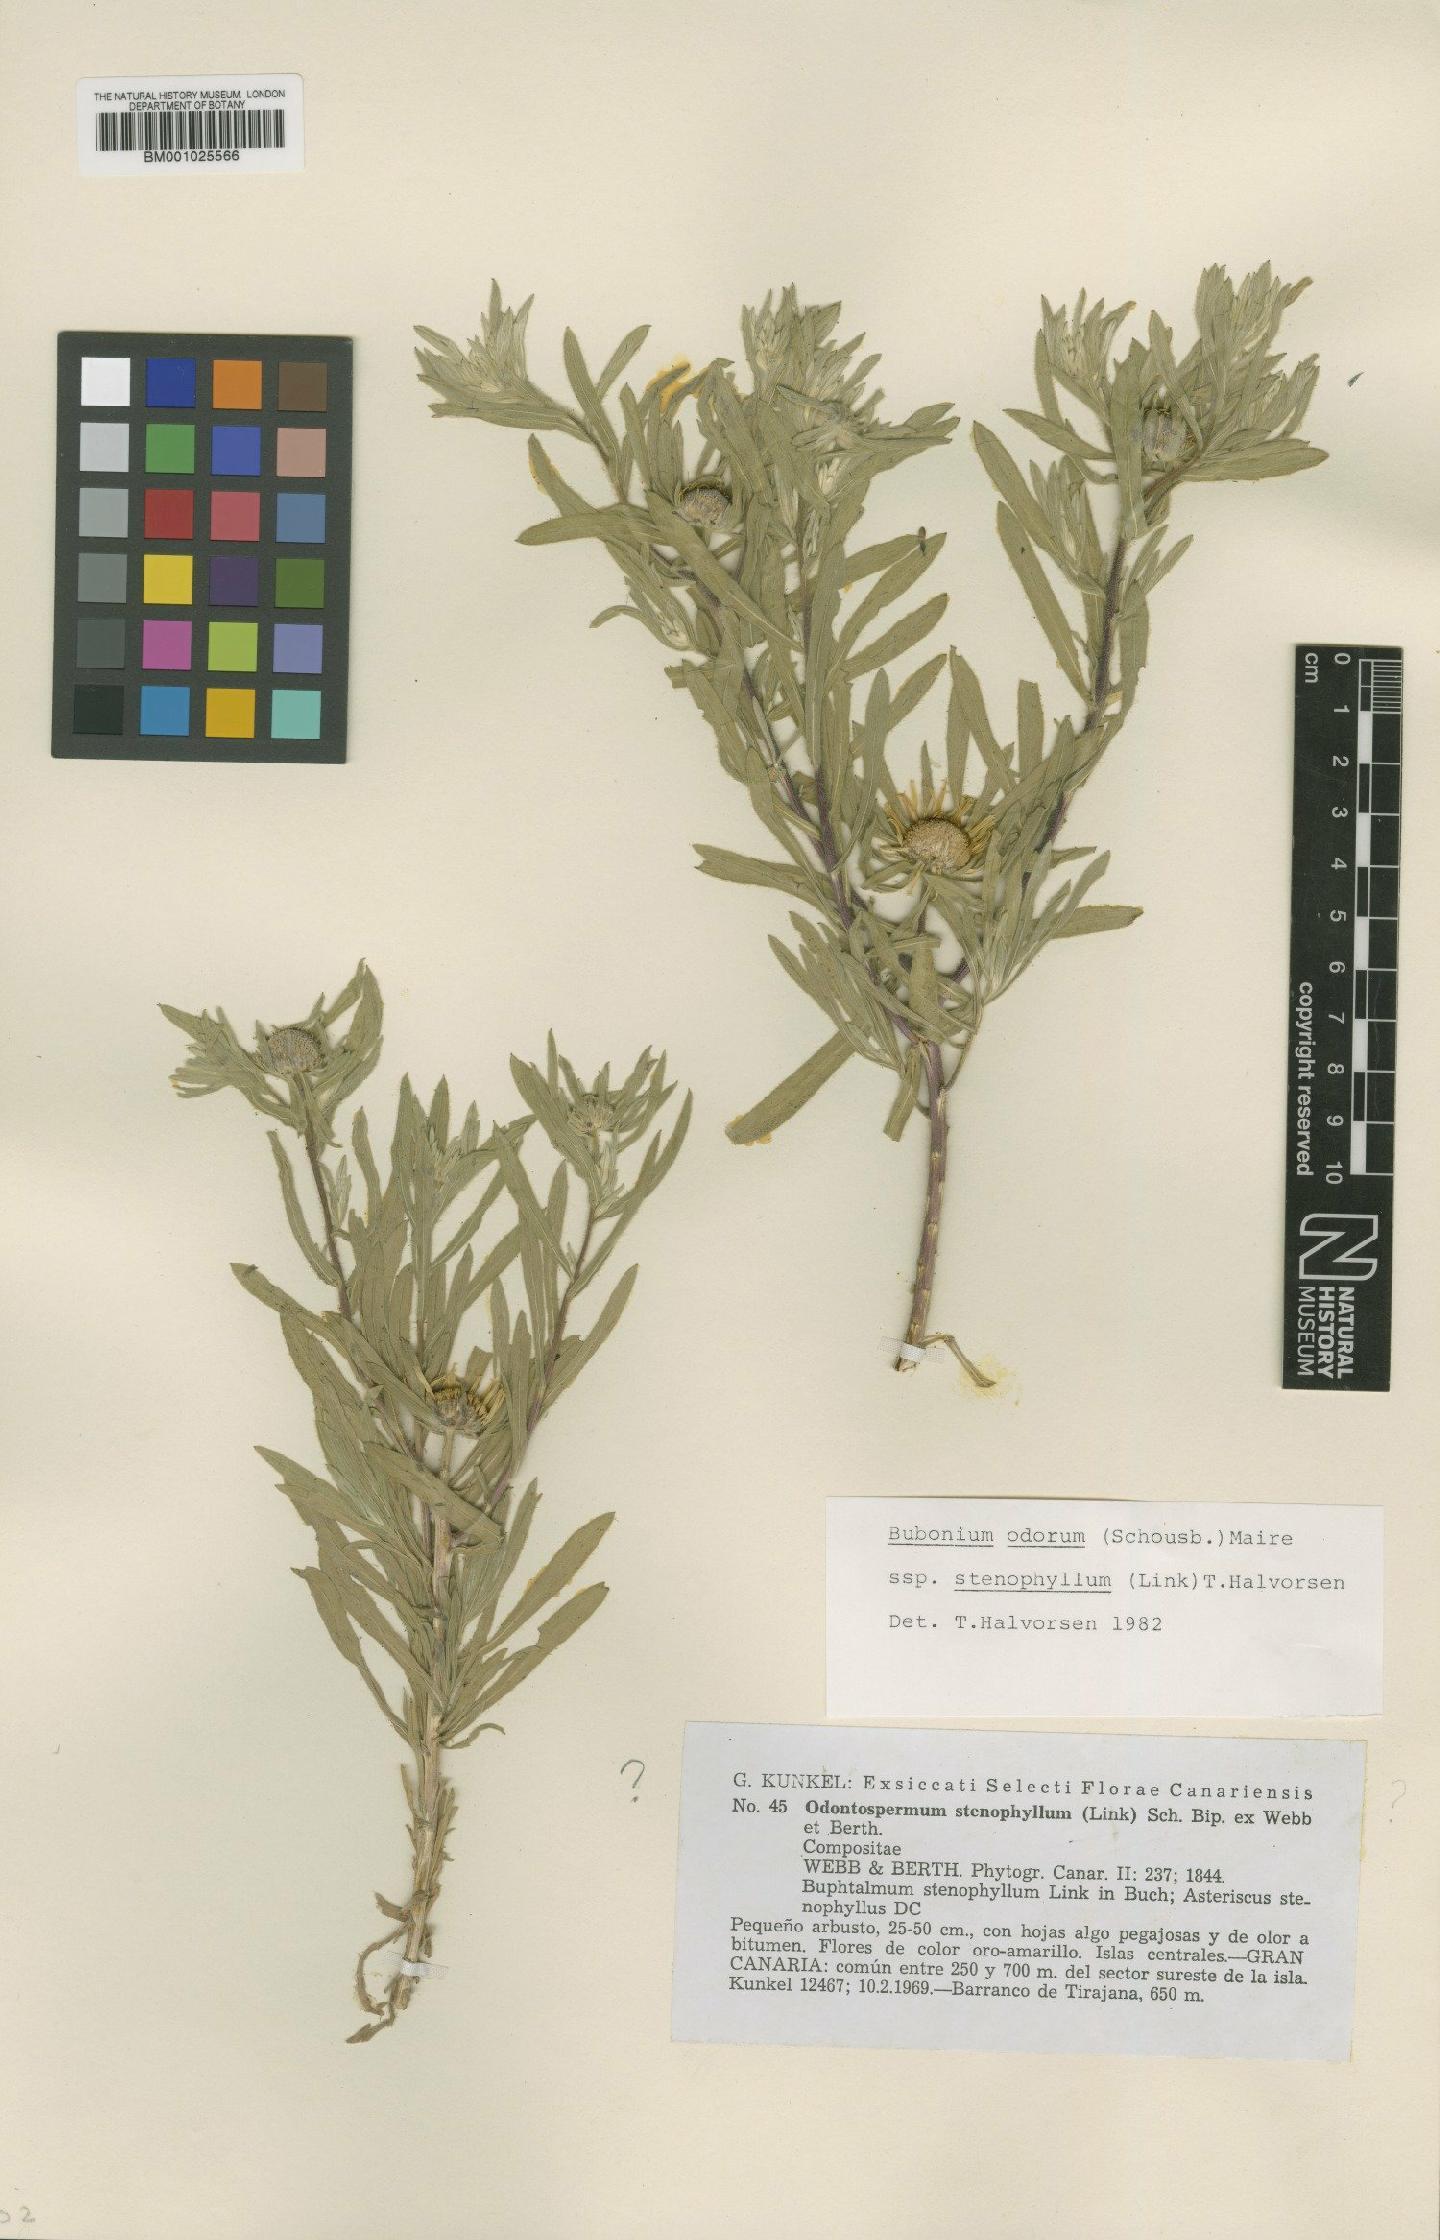 To NHMUK collection (Bubonium graveolens subsp. stenophyllum (Link) Halvorsen; Type; NHMUK:ecatalogue:1156157)